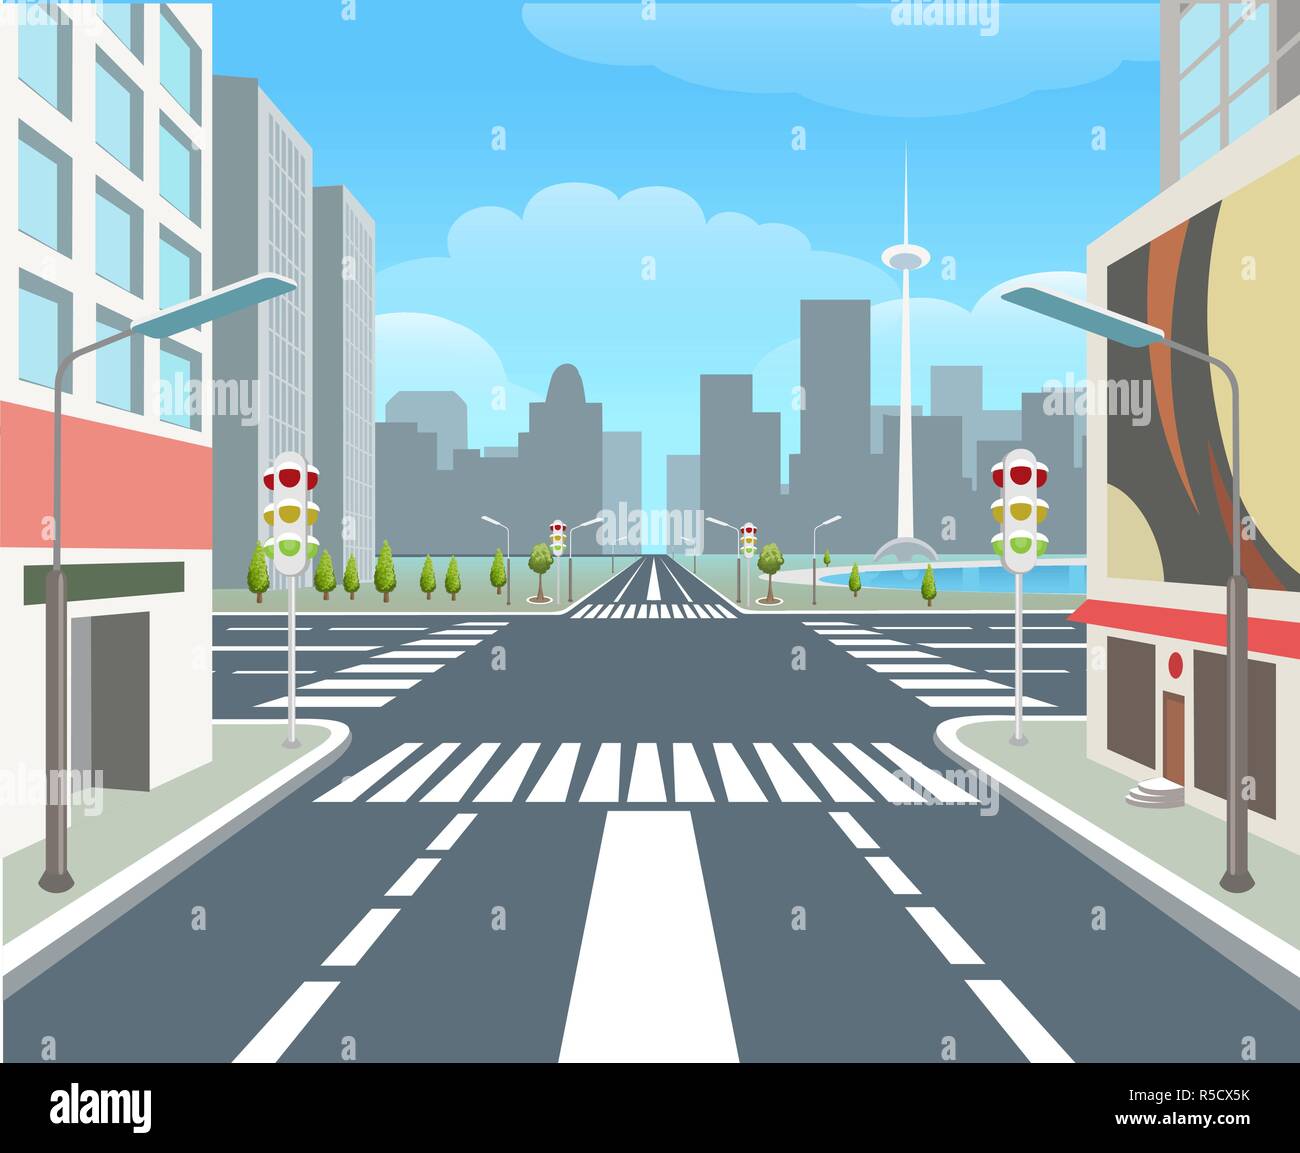 City road. Traffic road urban street, carsroad junctions, business  buildings, crossing roads, city highway, vector illustration Stock Vector  Image & Art - Alamy